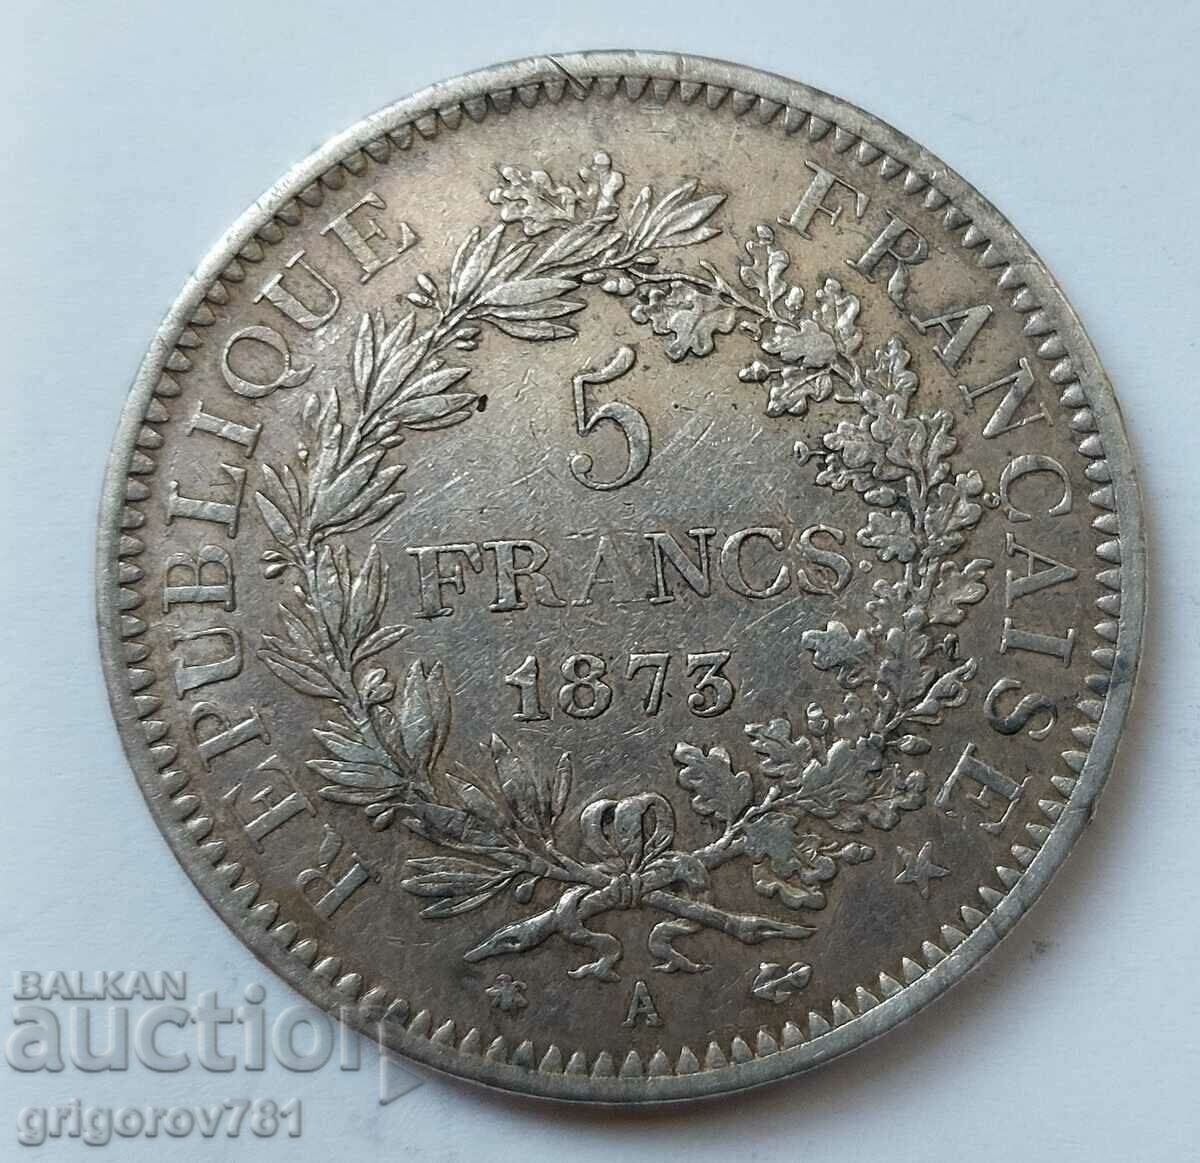 5 Francs Silver France 1973 A - Silver Coin #87